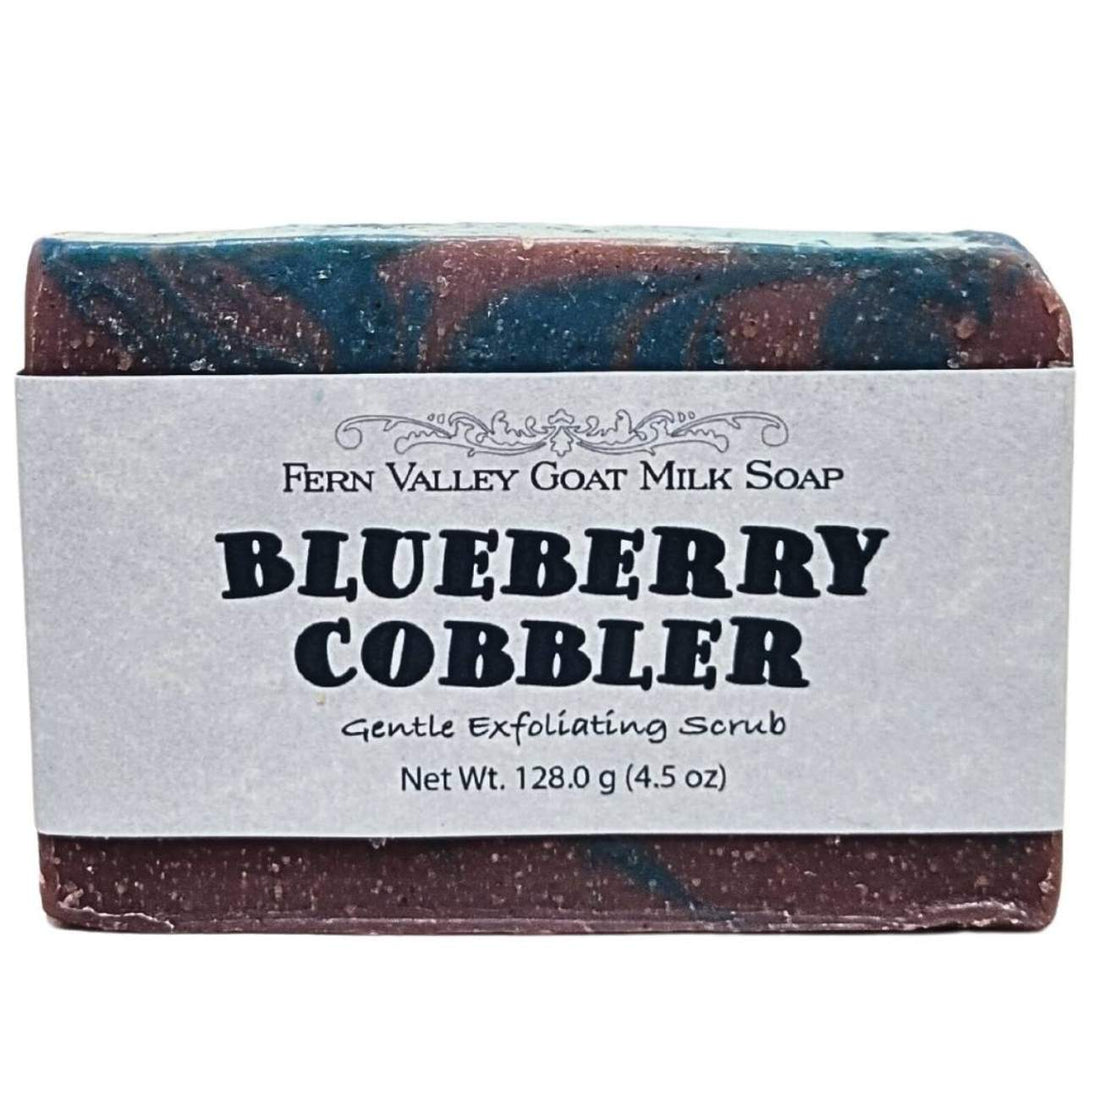 Natural Goat Milk Soap | Exfoliating Scrub | Blueberry Cobbler